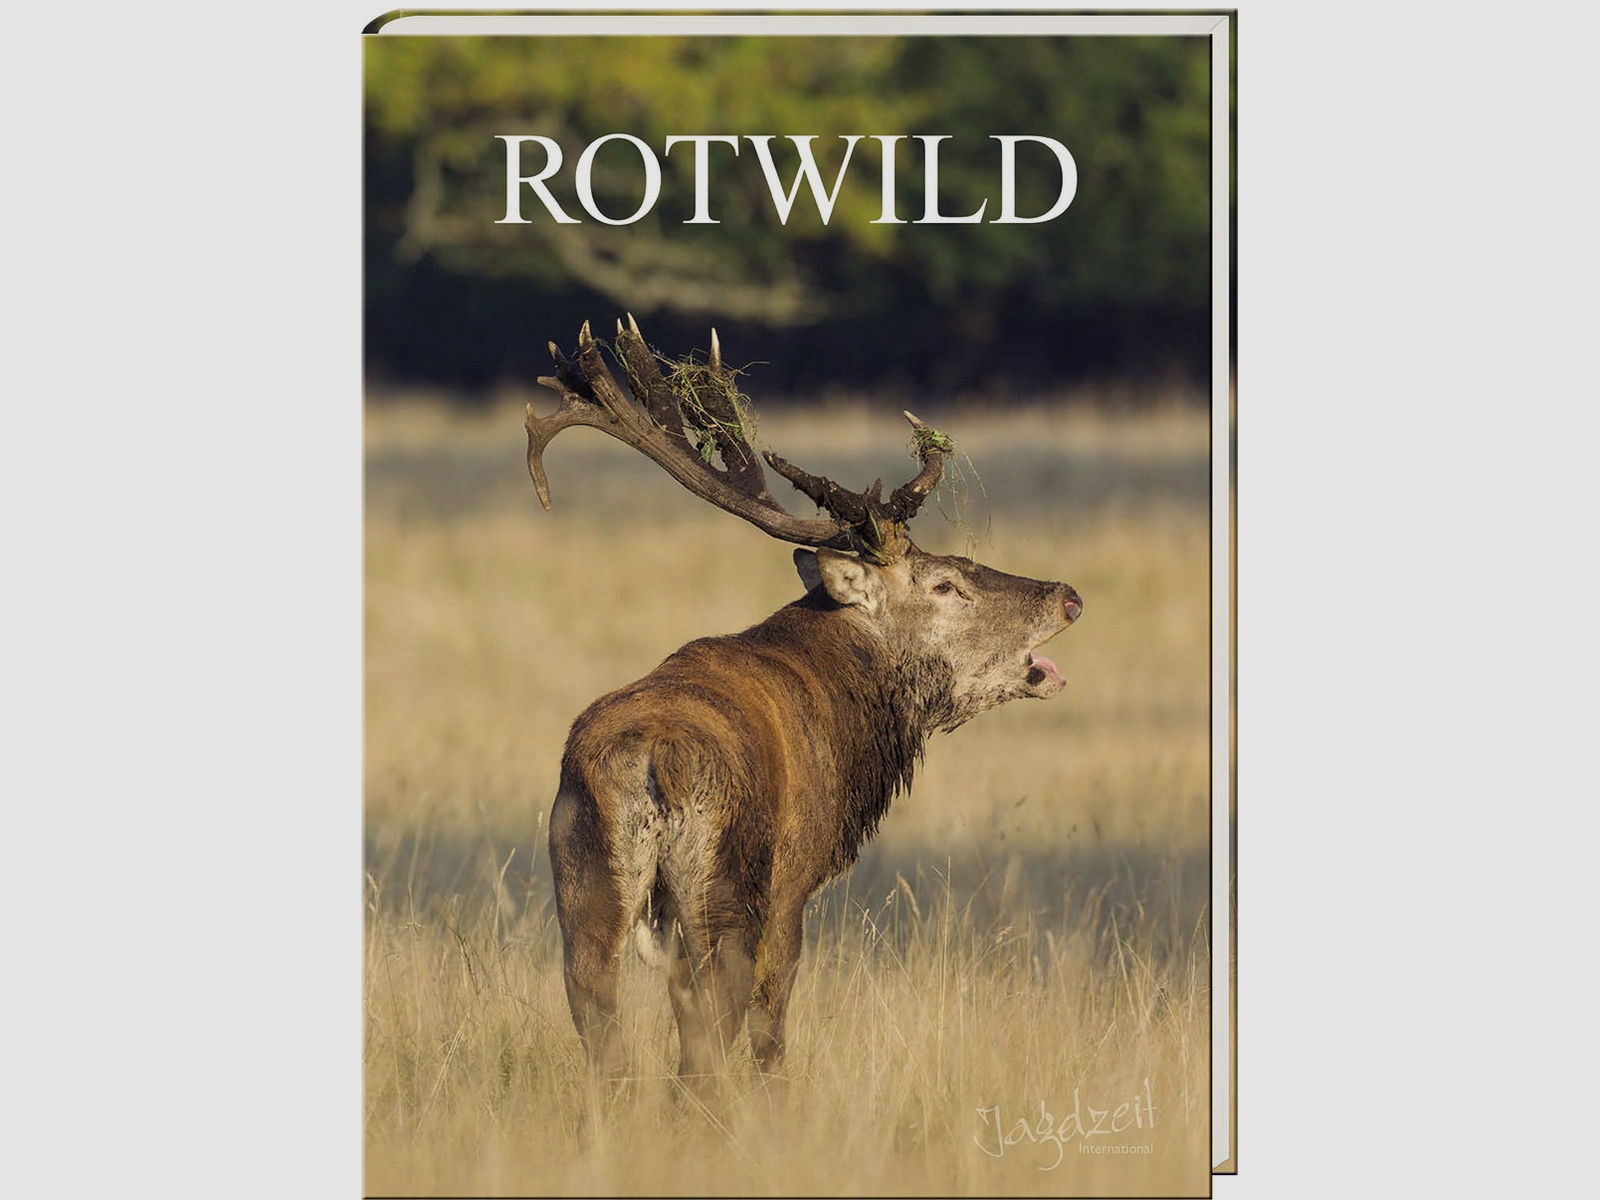 Themenband "Rotwild"